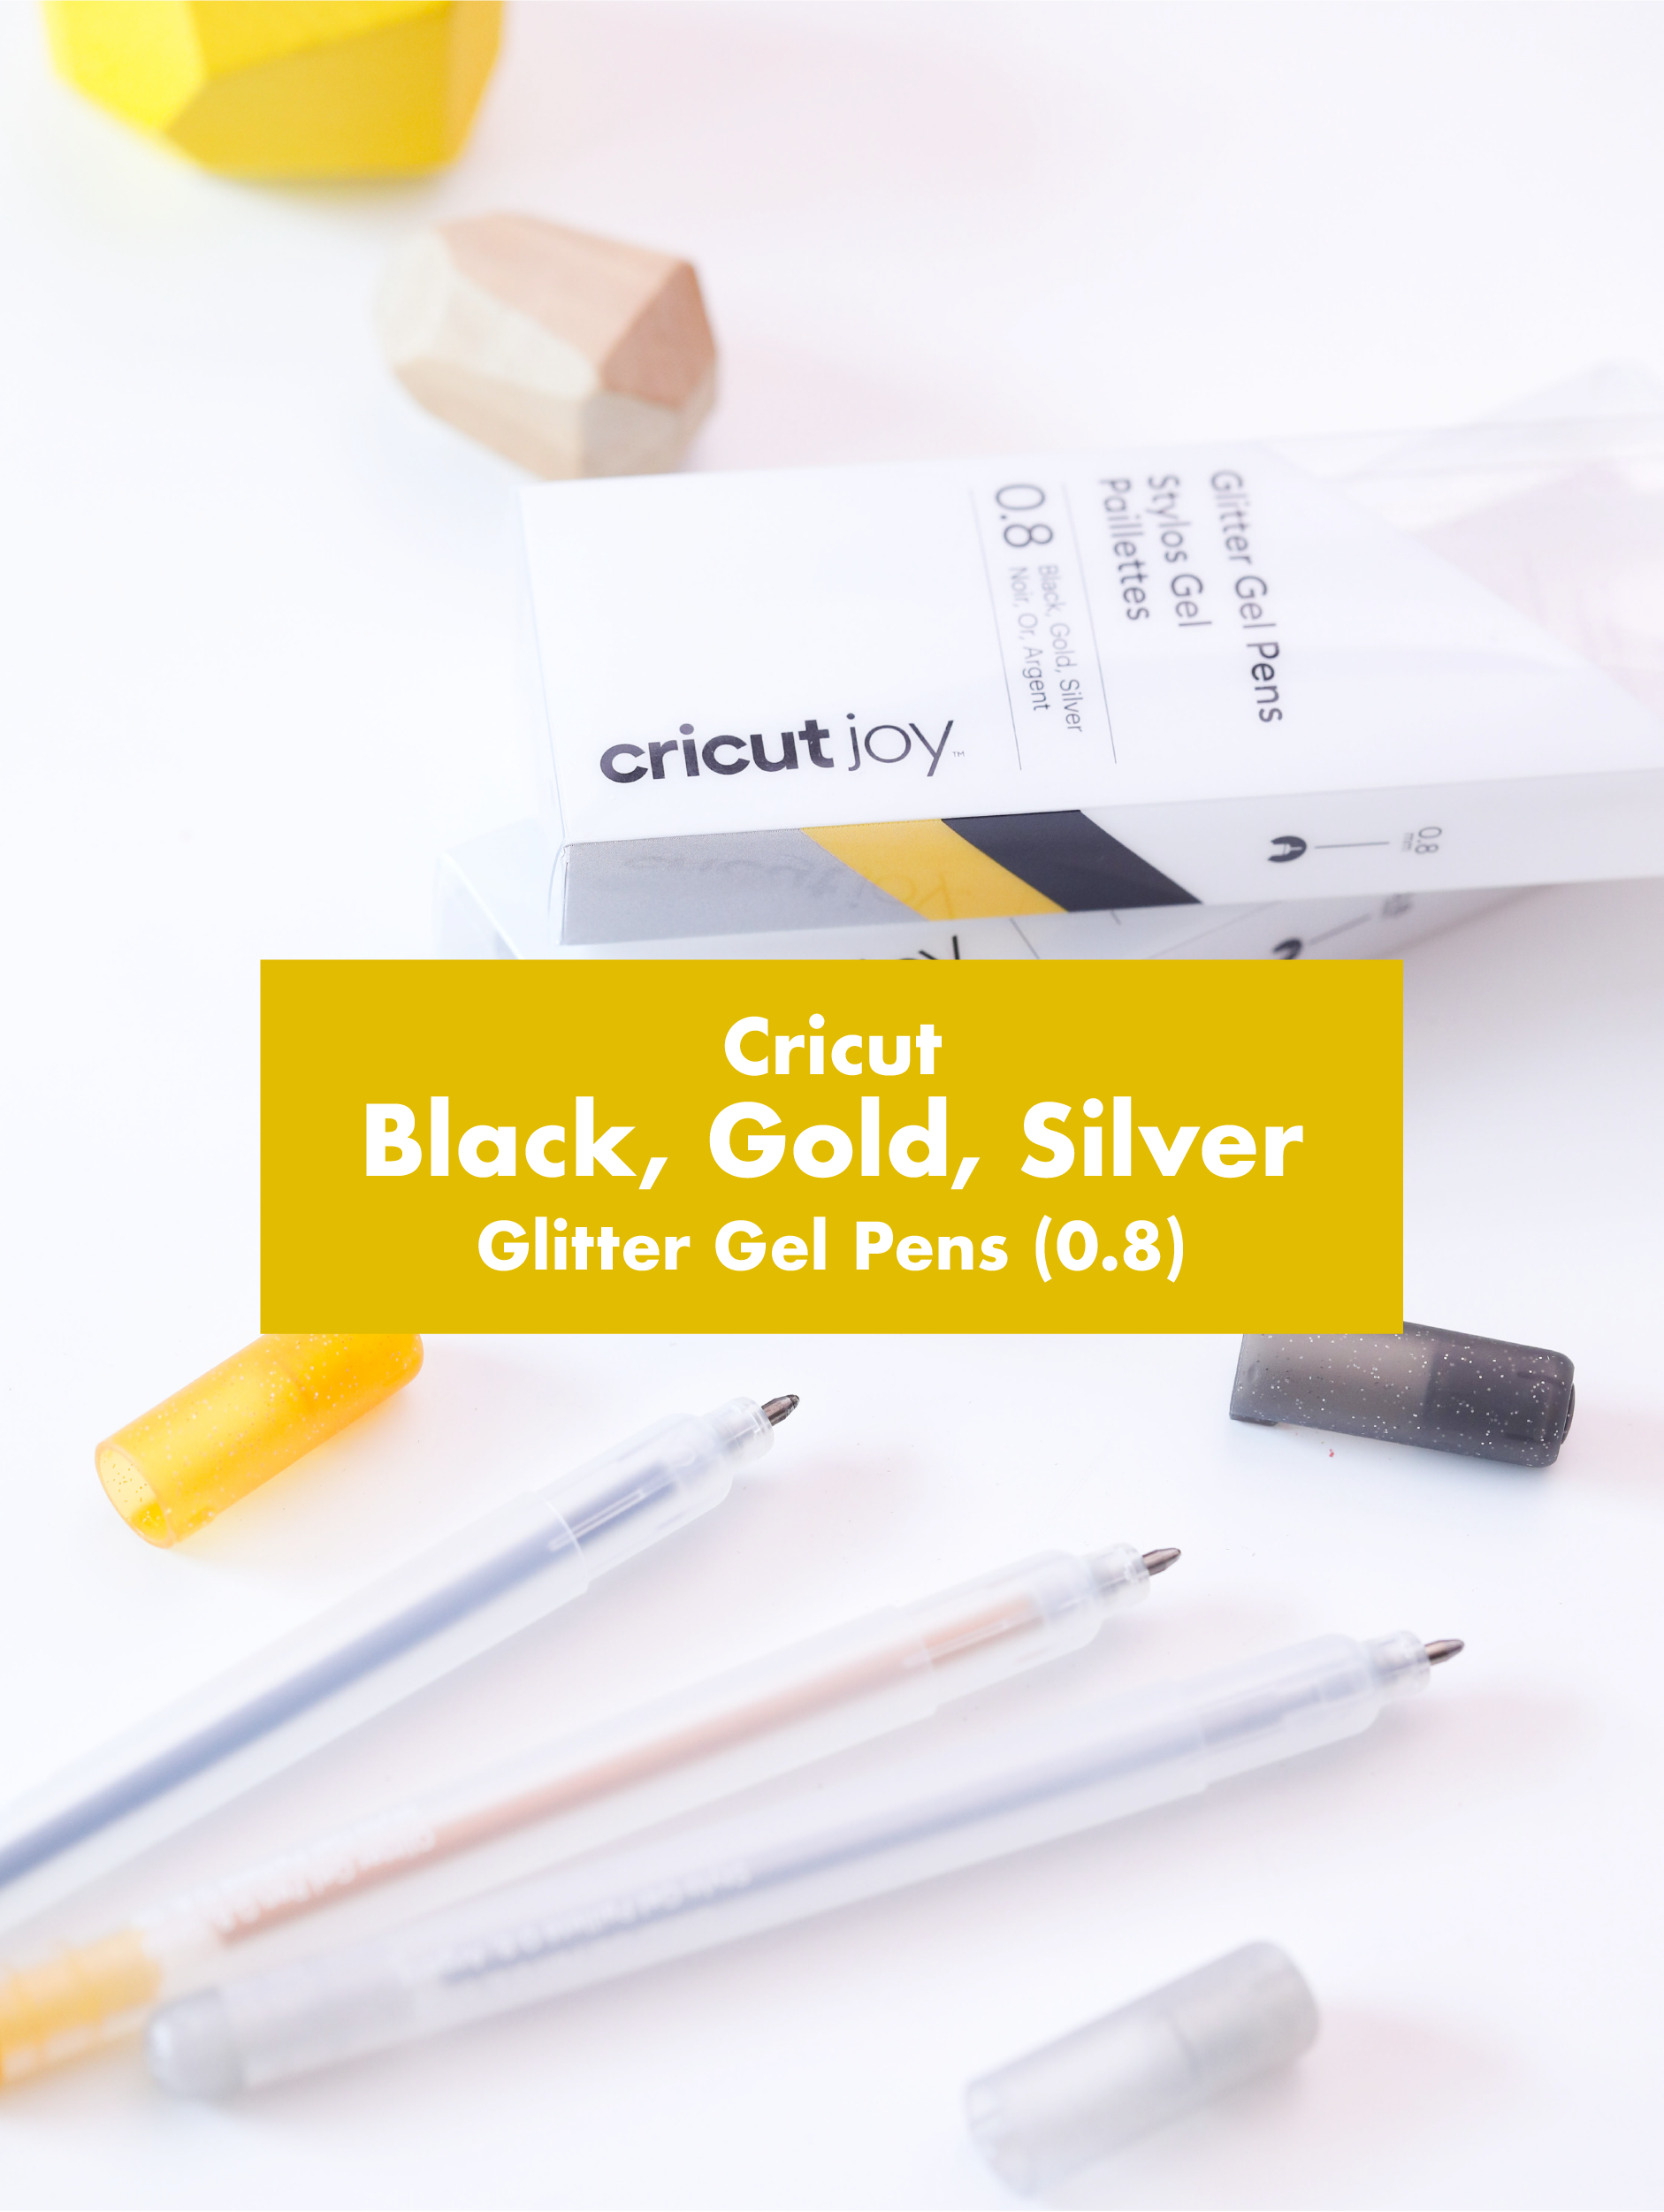 Cricut Joy Glitter Gel Pens, 0.8 mm (3 ct) | Black, Gold, Silver-Cricut Joy Accessories-GooglyGooeys | Cricut | Arts Craft and DIY Store based in the Philippines